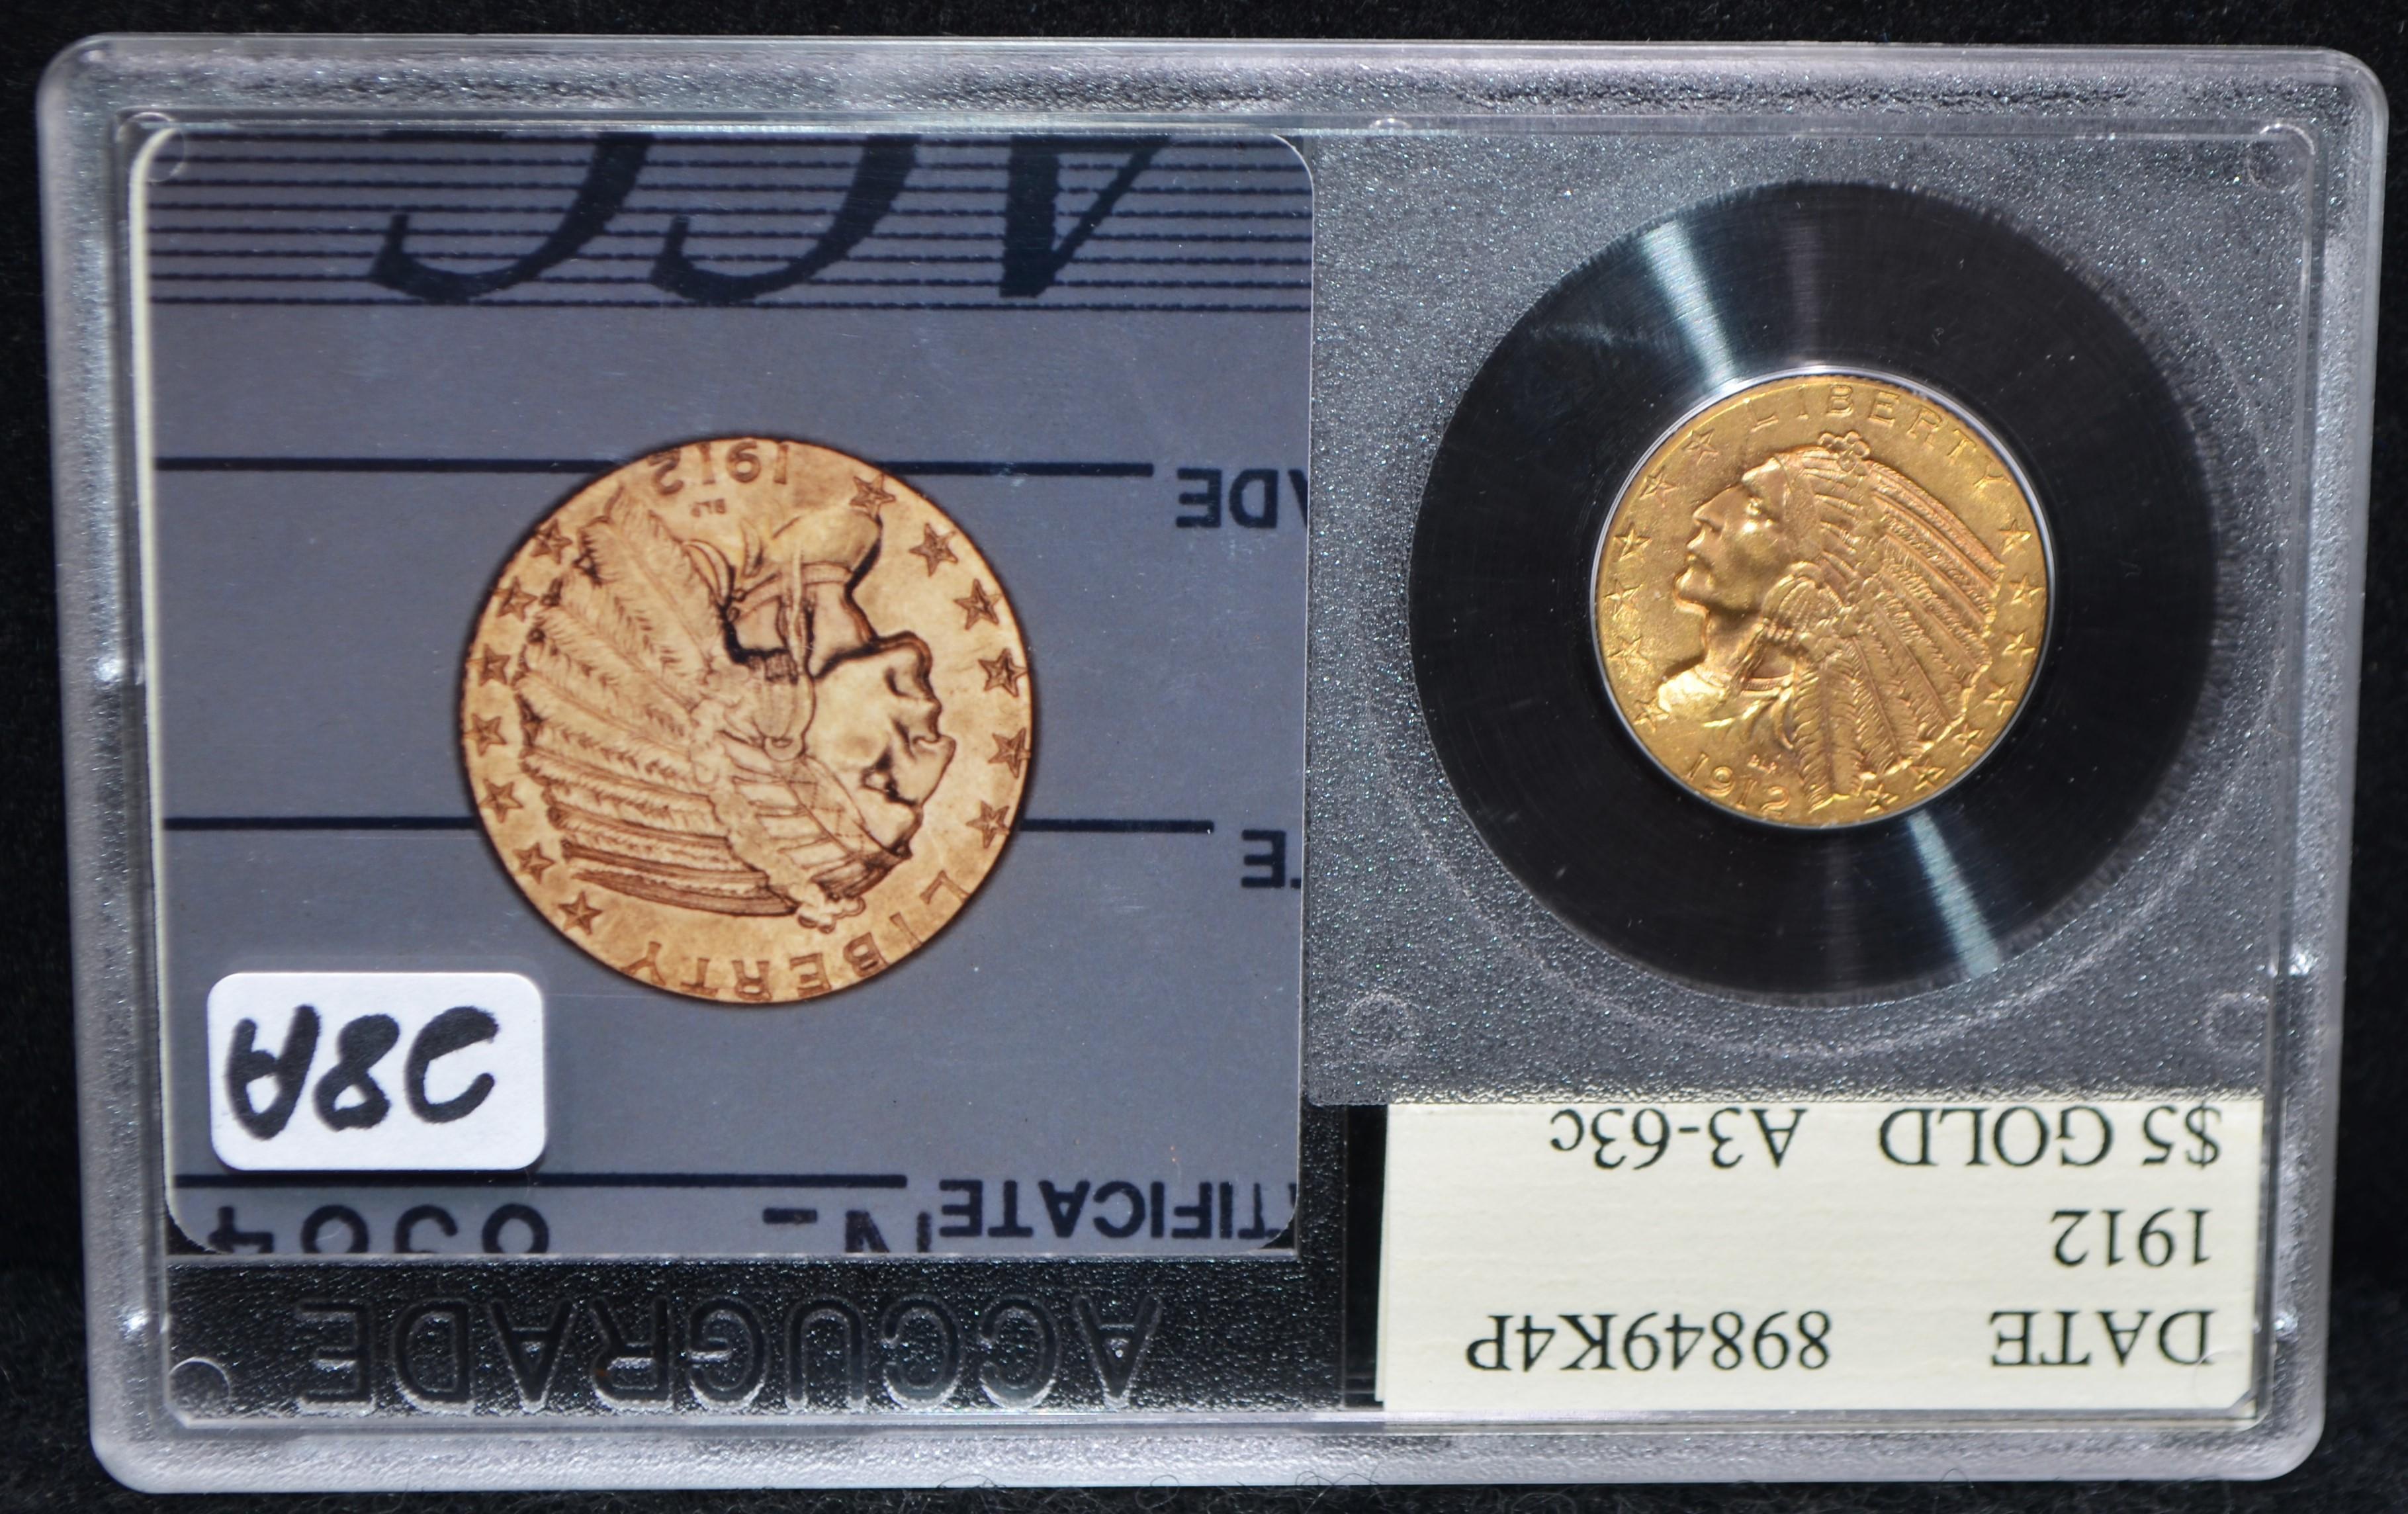 CHOICE 1912 $5 INDIAN GOLD COIN - ACCUGRADE MS63